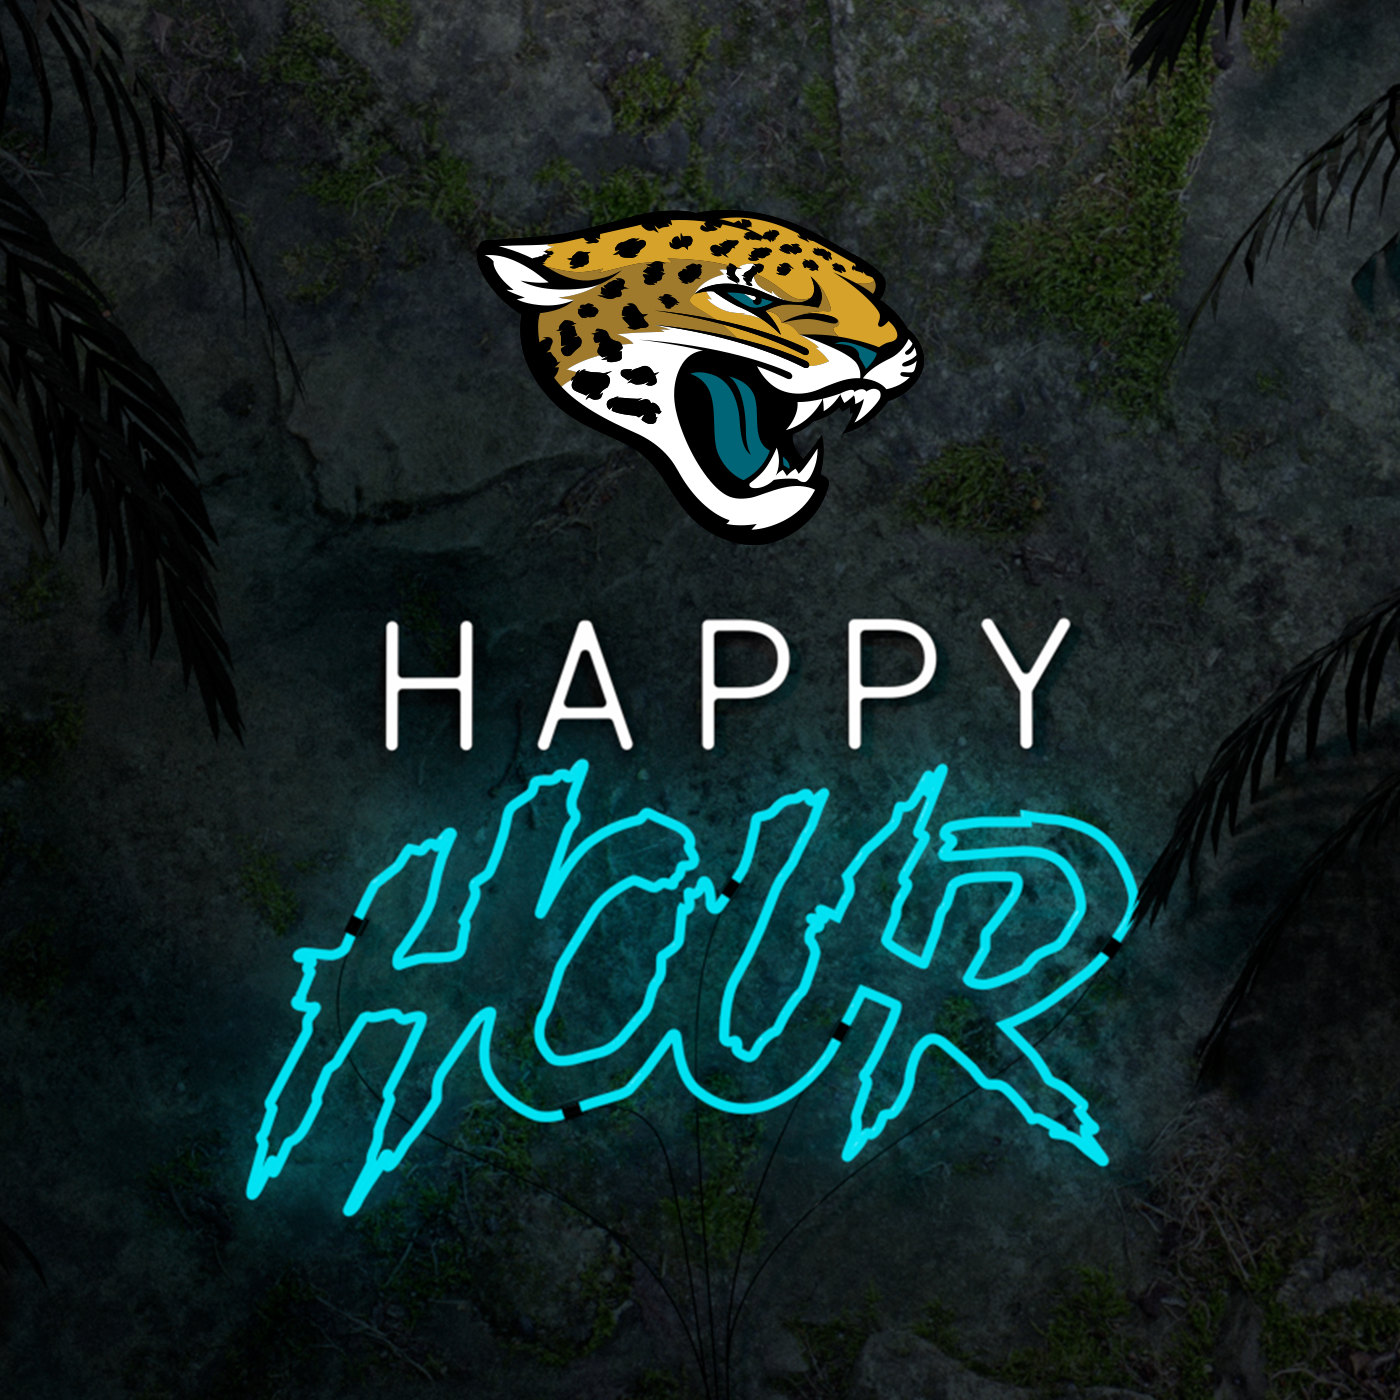 Draft Night in Duval | Jaguars Happy Hour